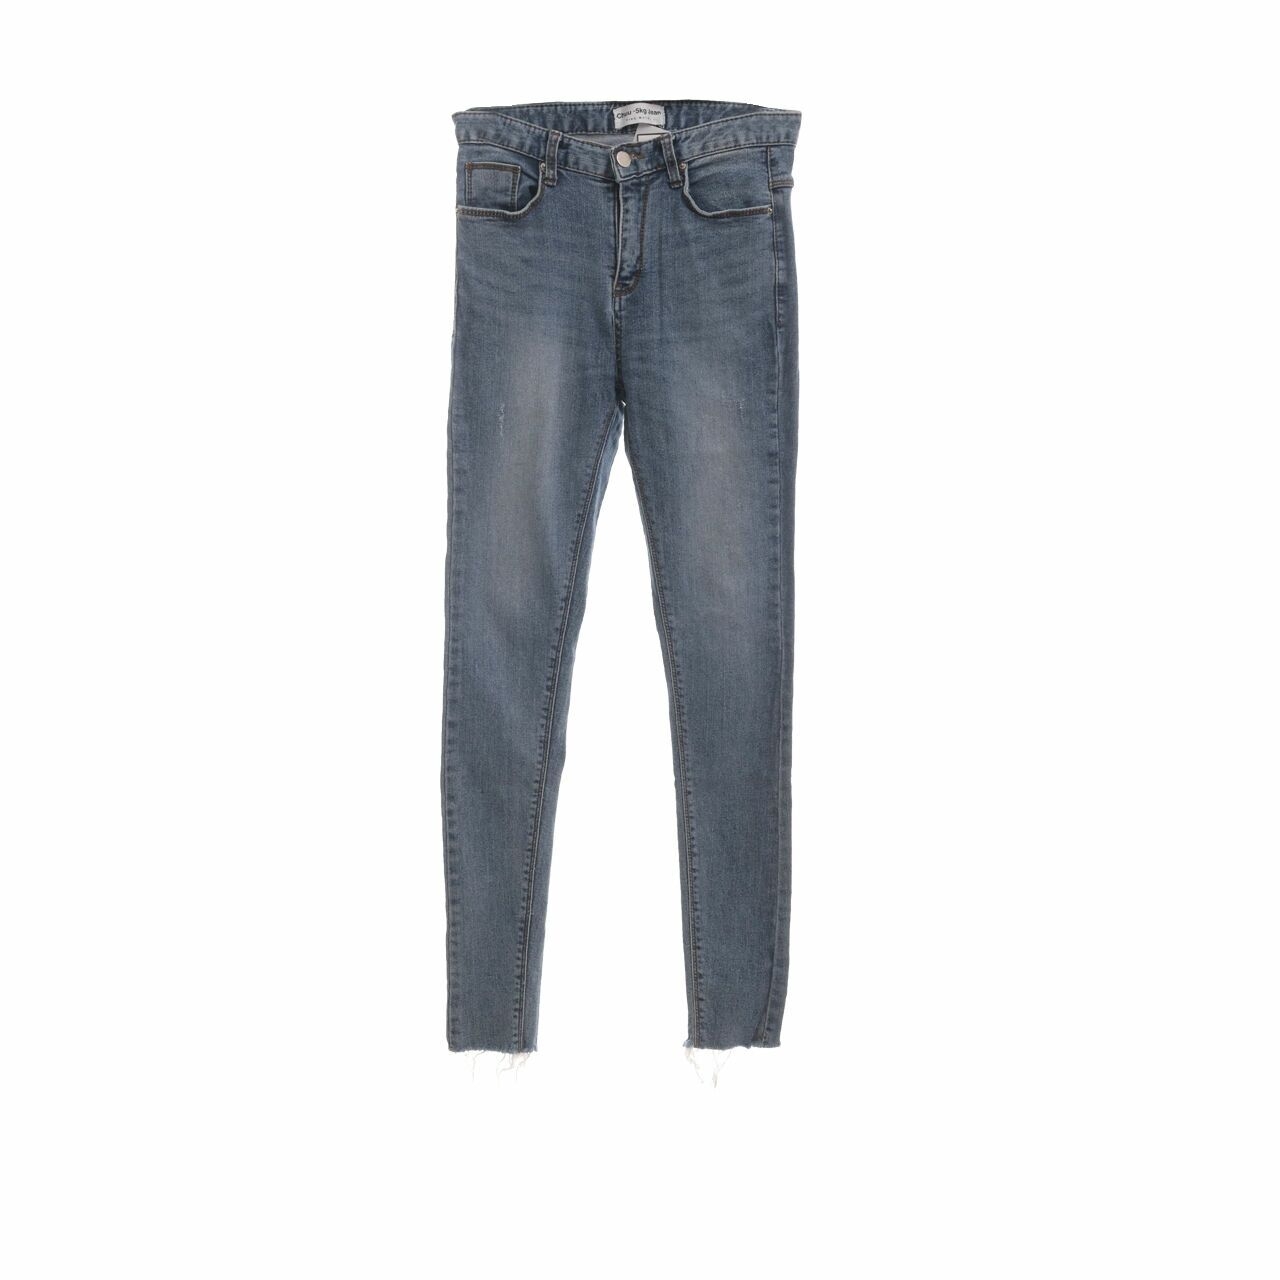 chuu-jeans Blue Long Pants